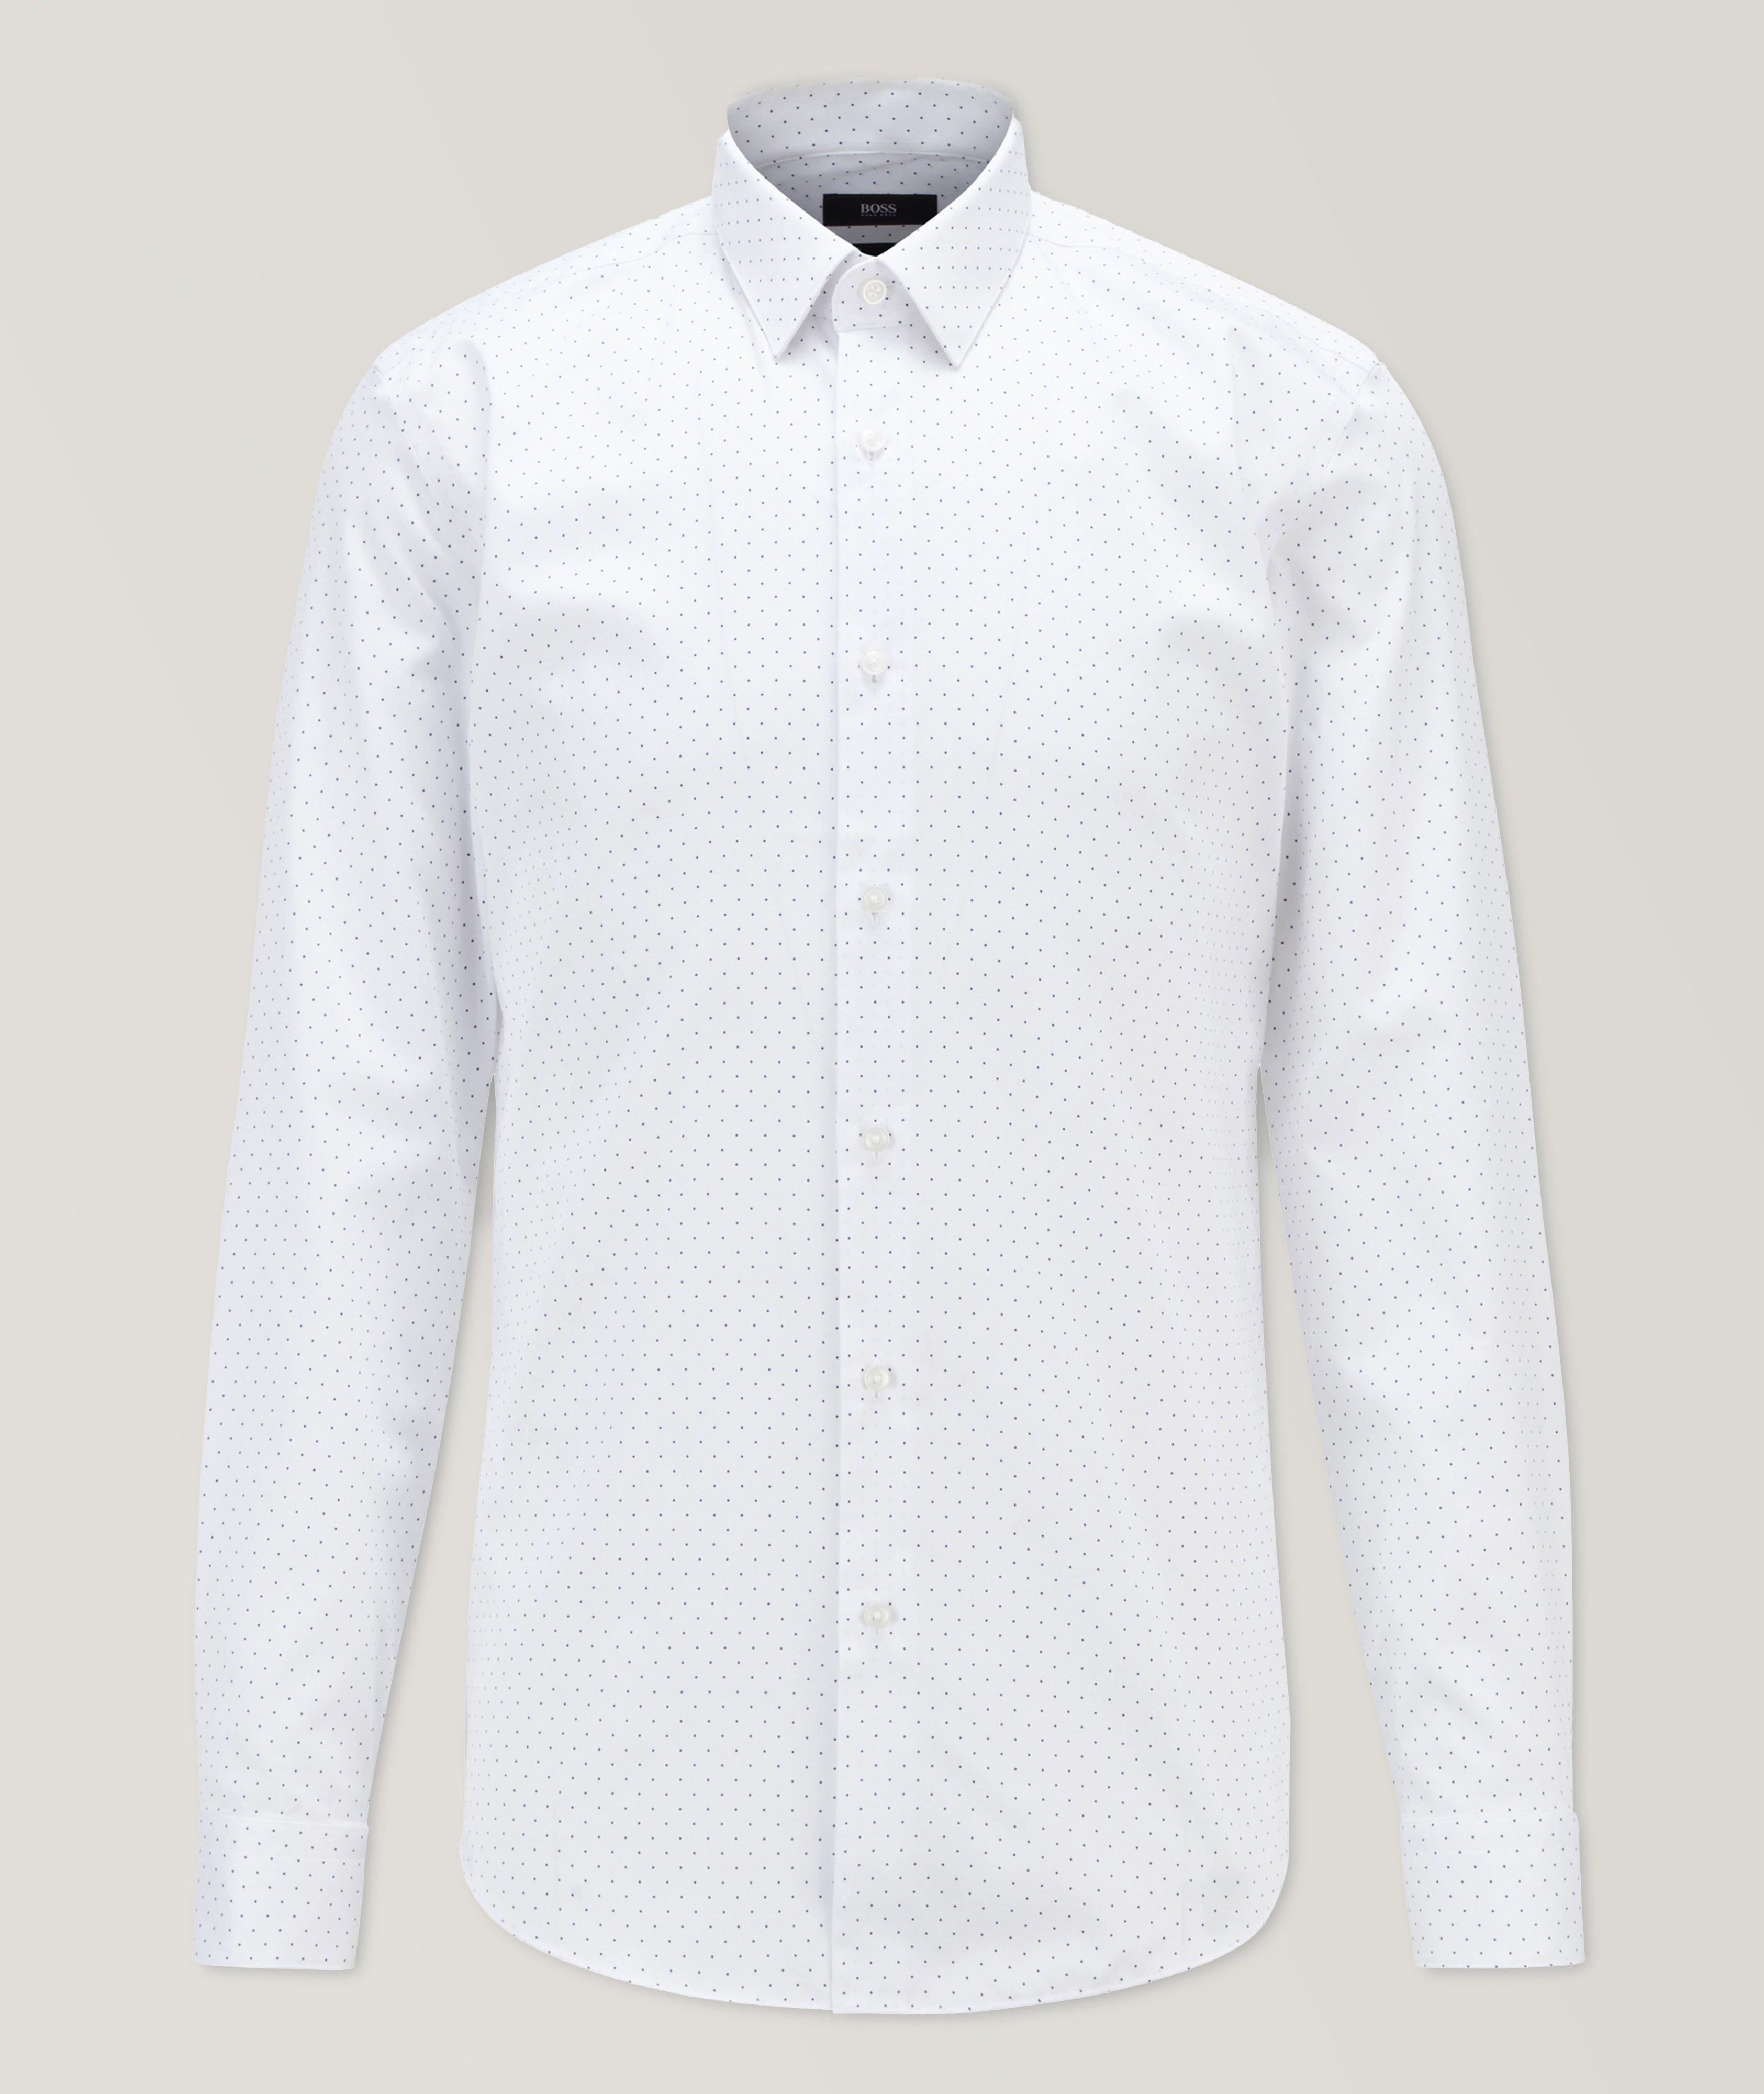 Slim-Fit Pindot Cotton Dress Shirt image 0